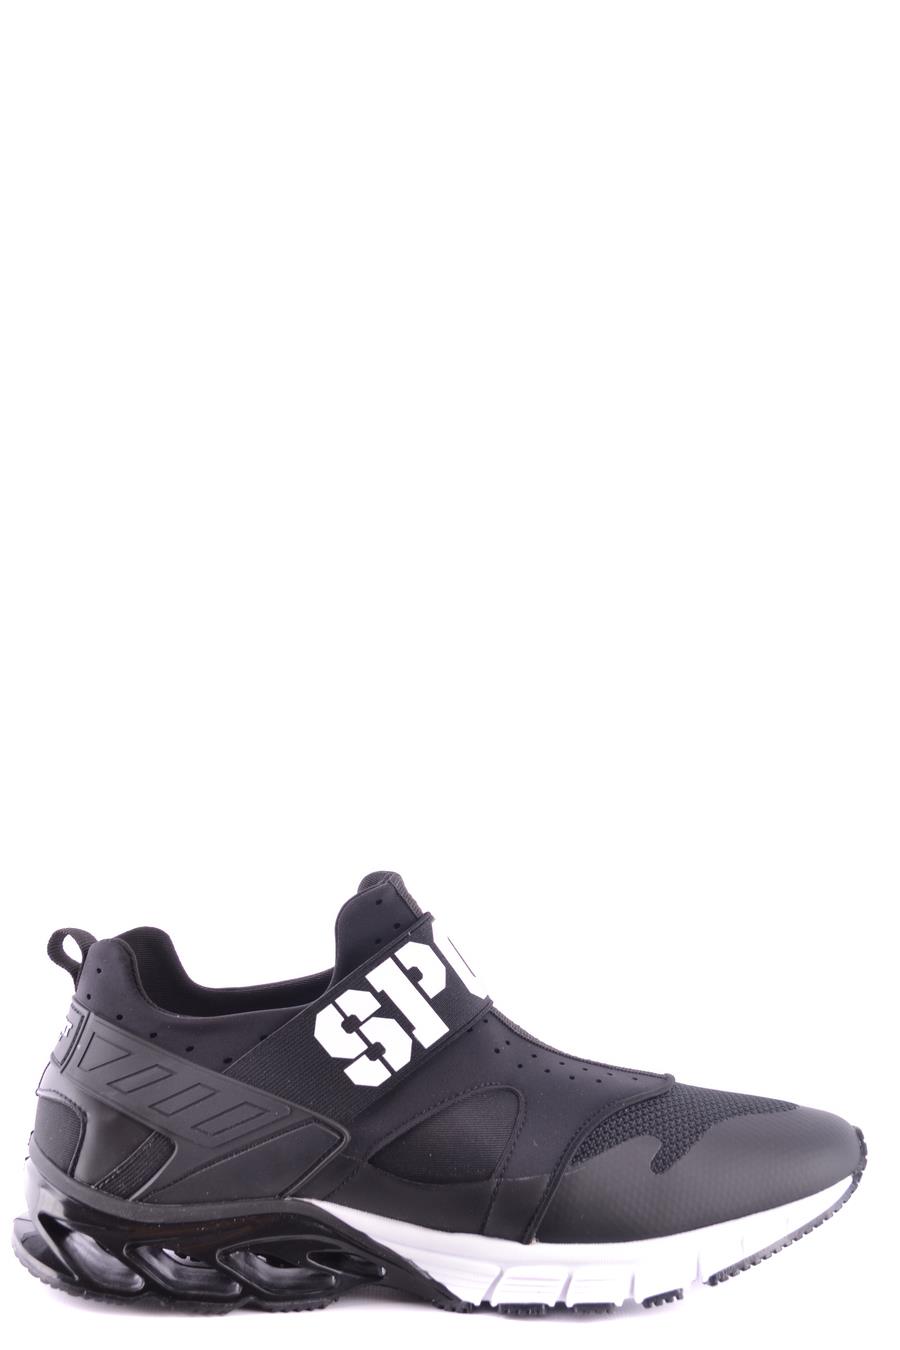 PLEIN SPORT Sneakers | ViganoBoutique.com